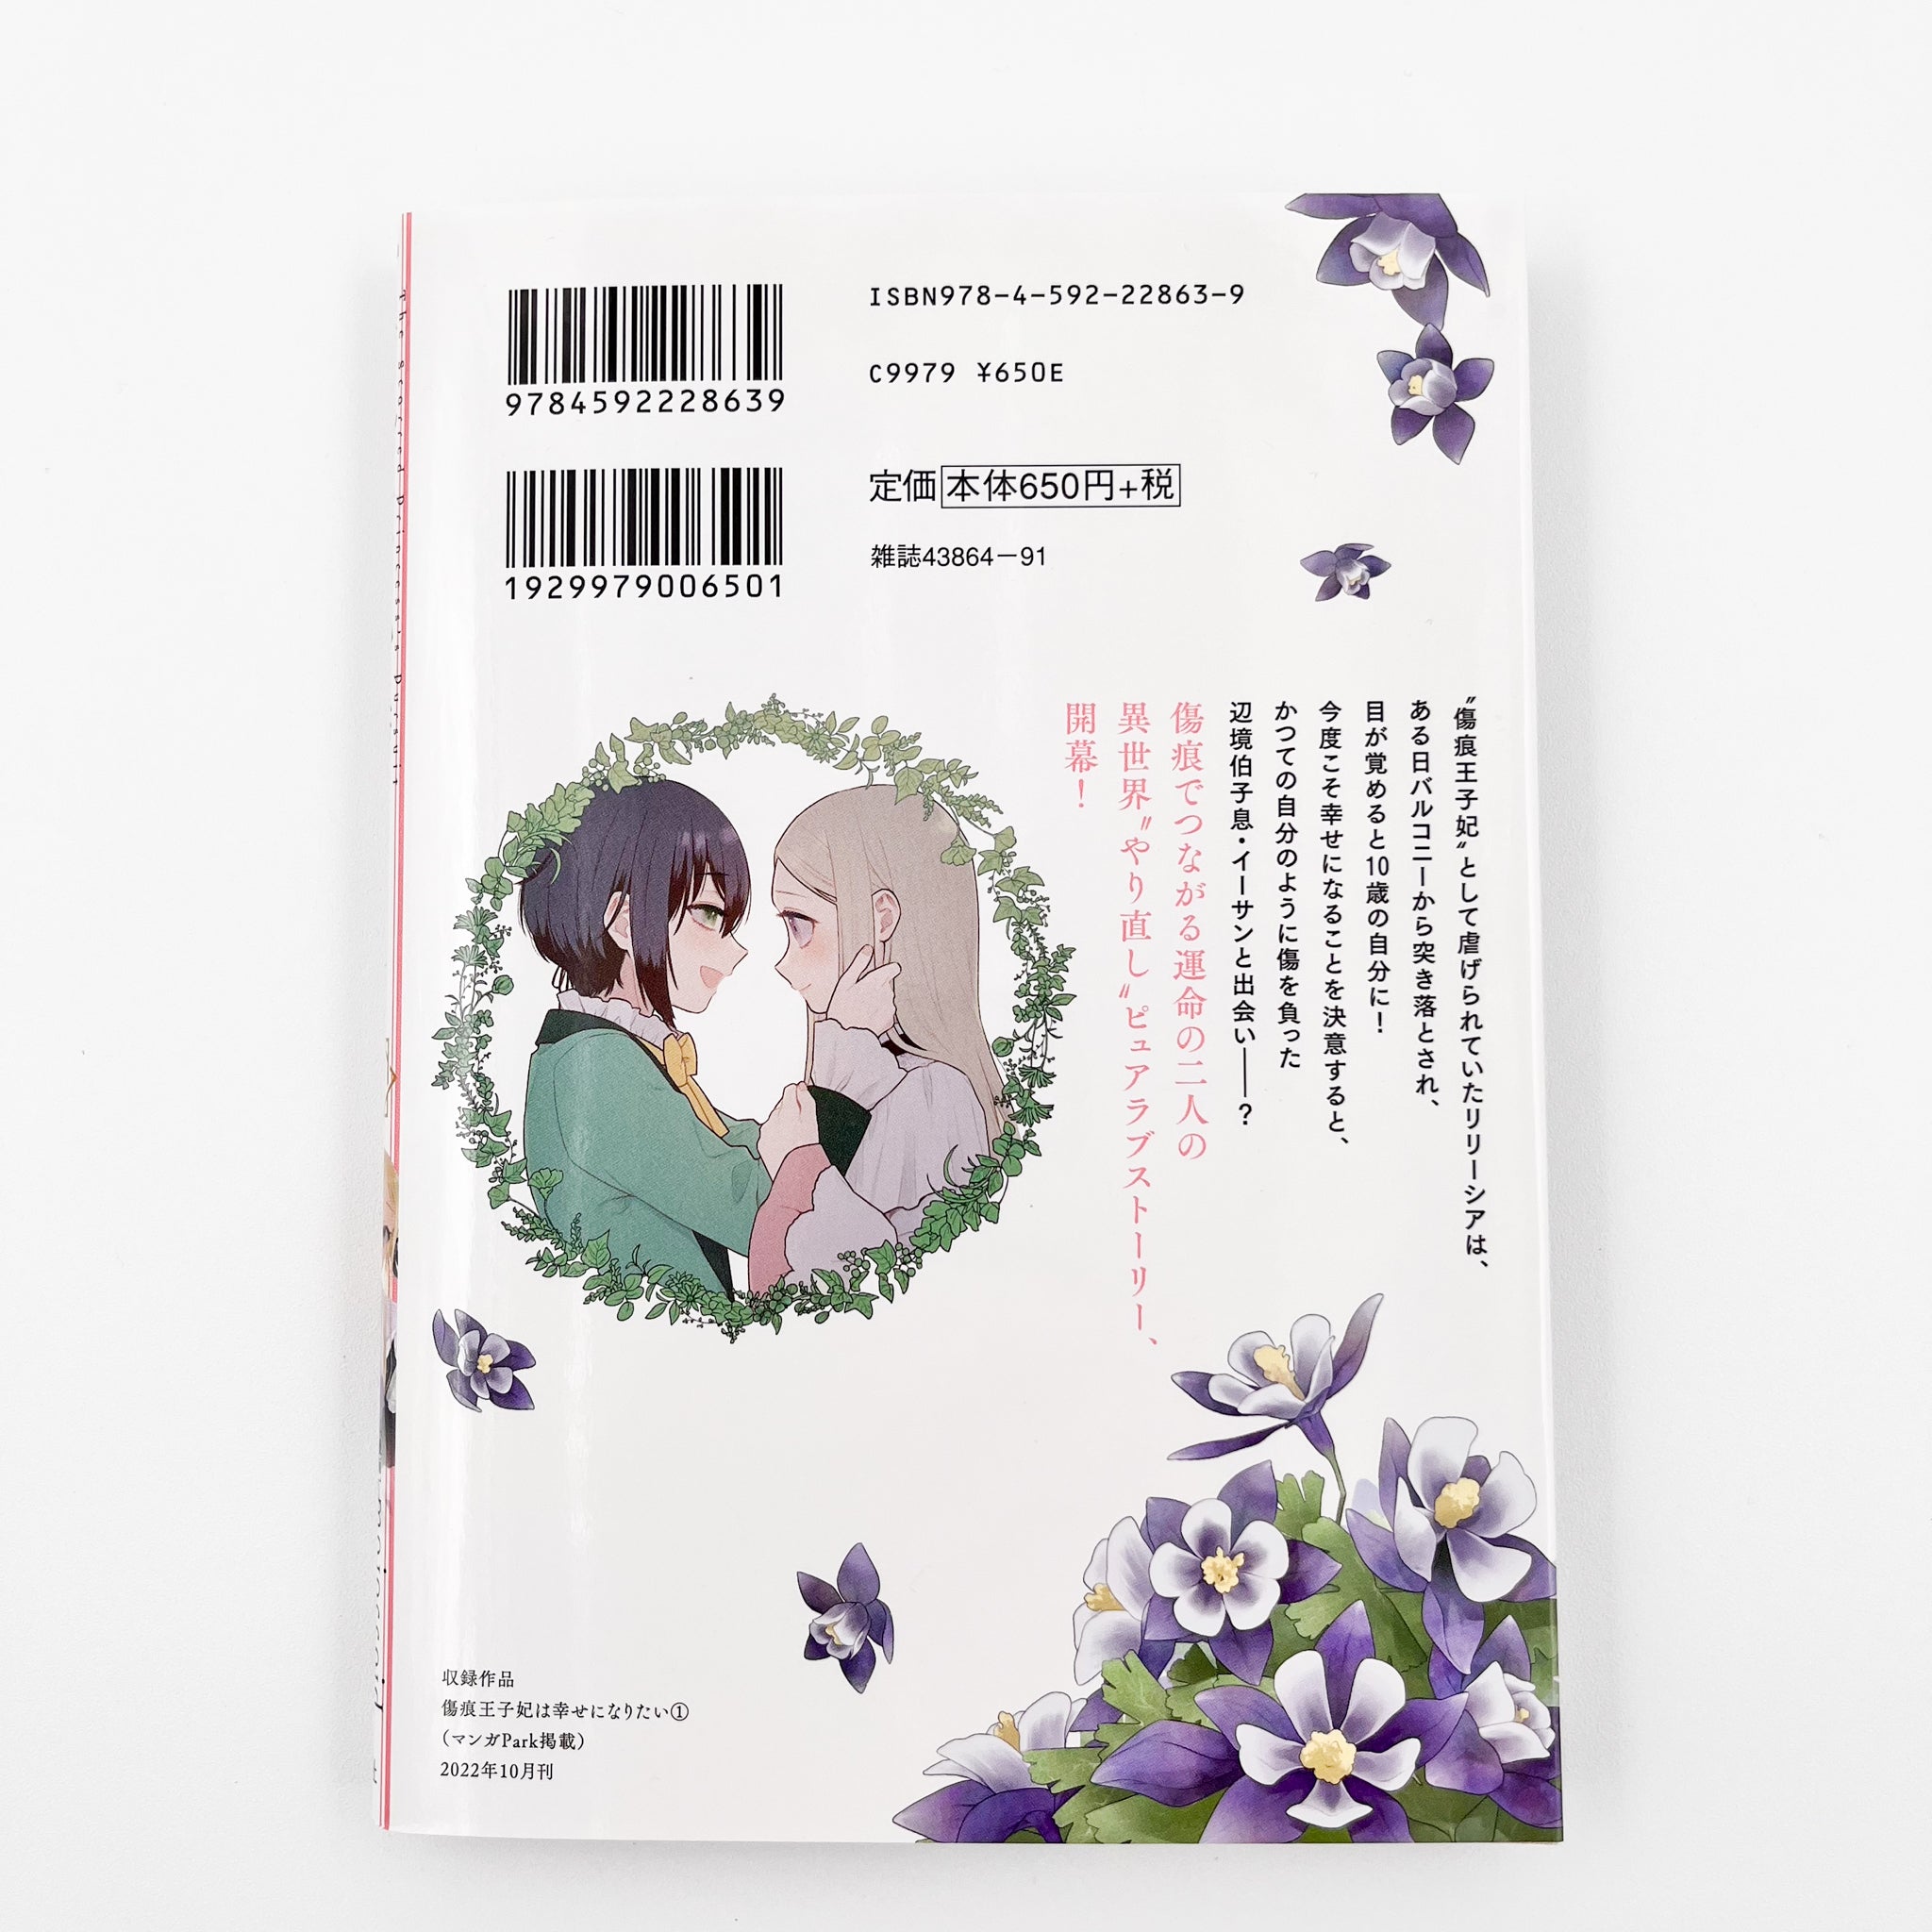 Kizuato Ouji Hi wa Shiawase ni naritai volume 1 back cover